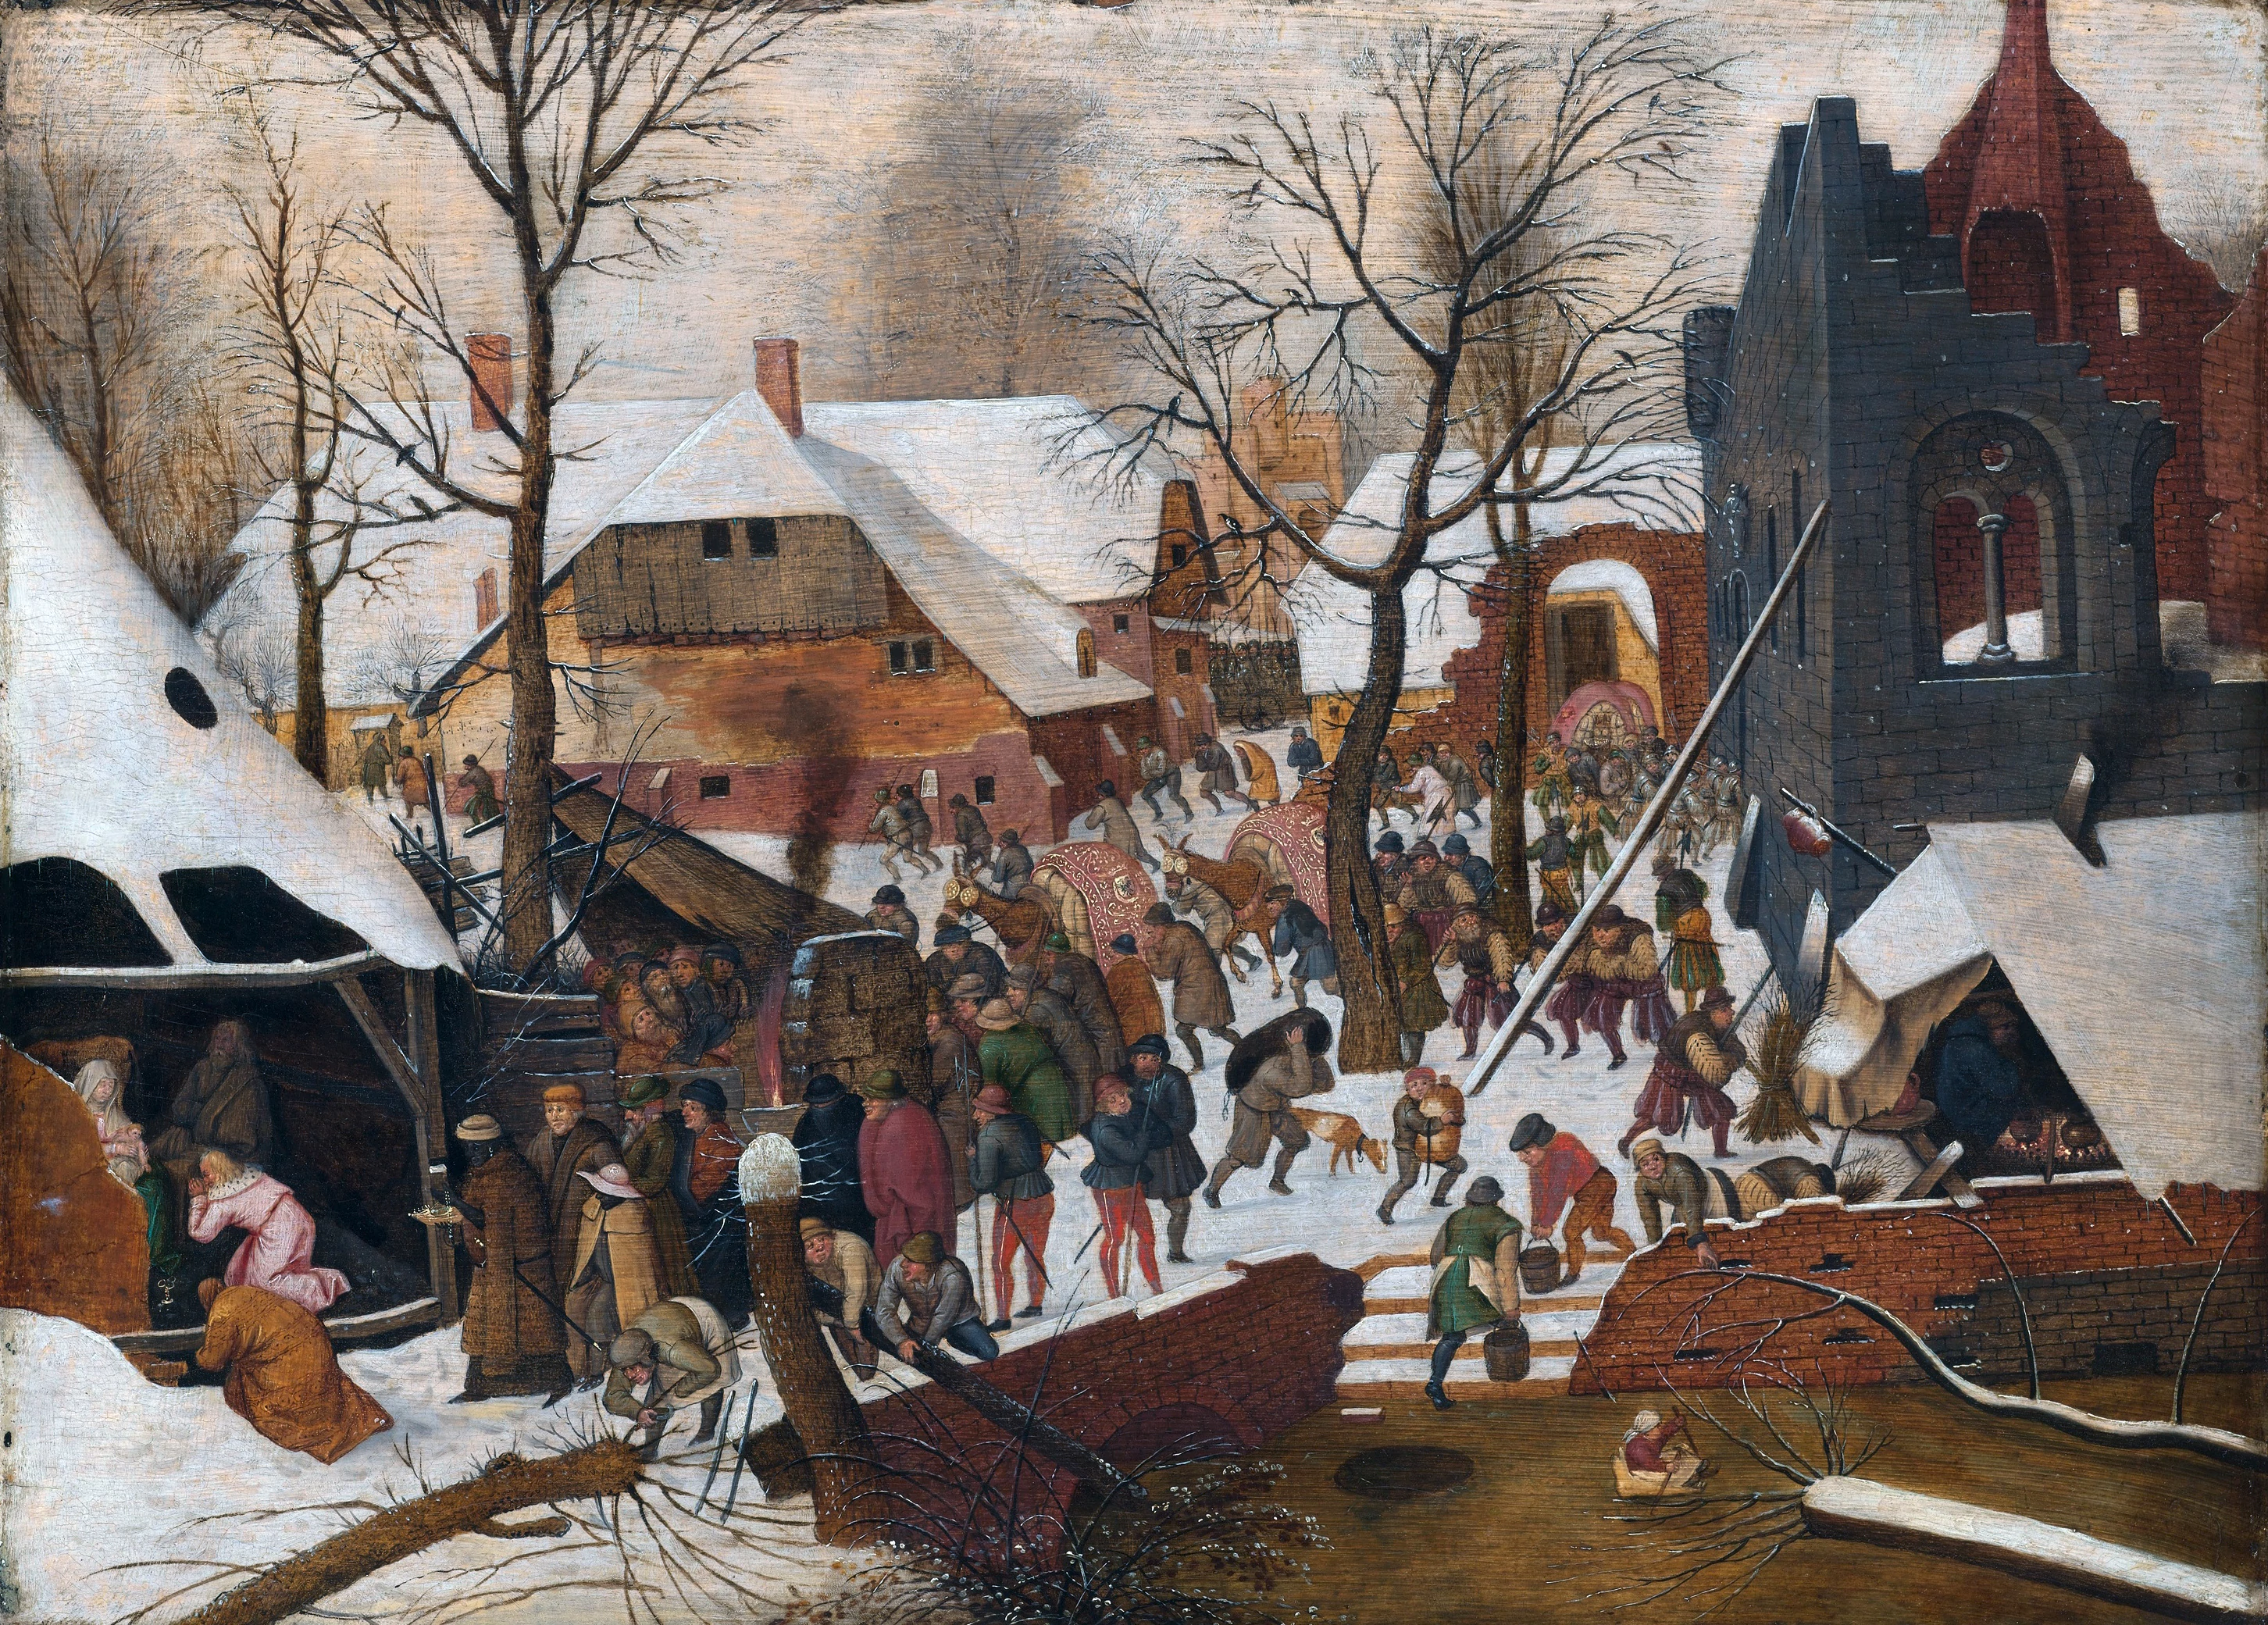 Adoration of the Kings in the Snow, Pieter Bruegel the Elder